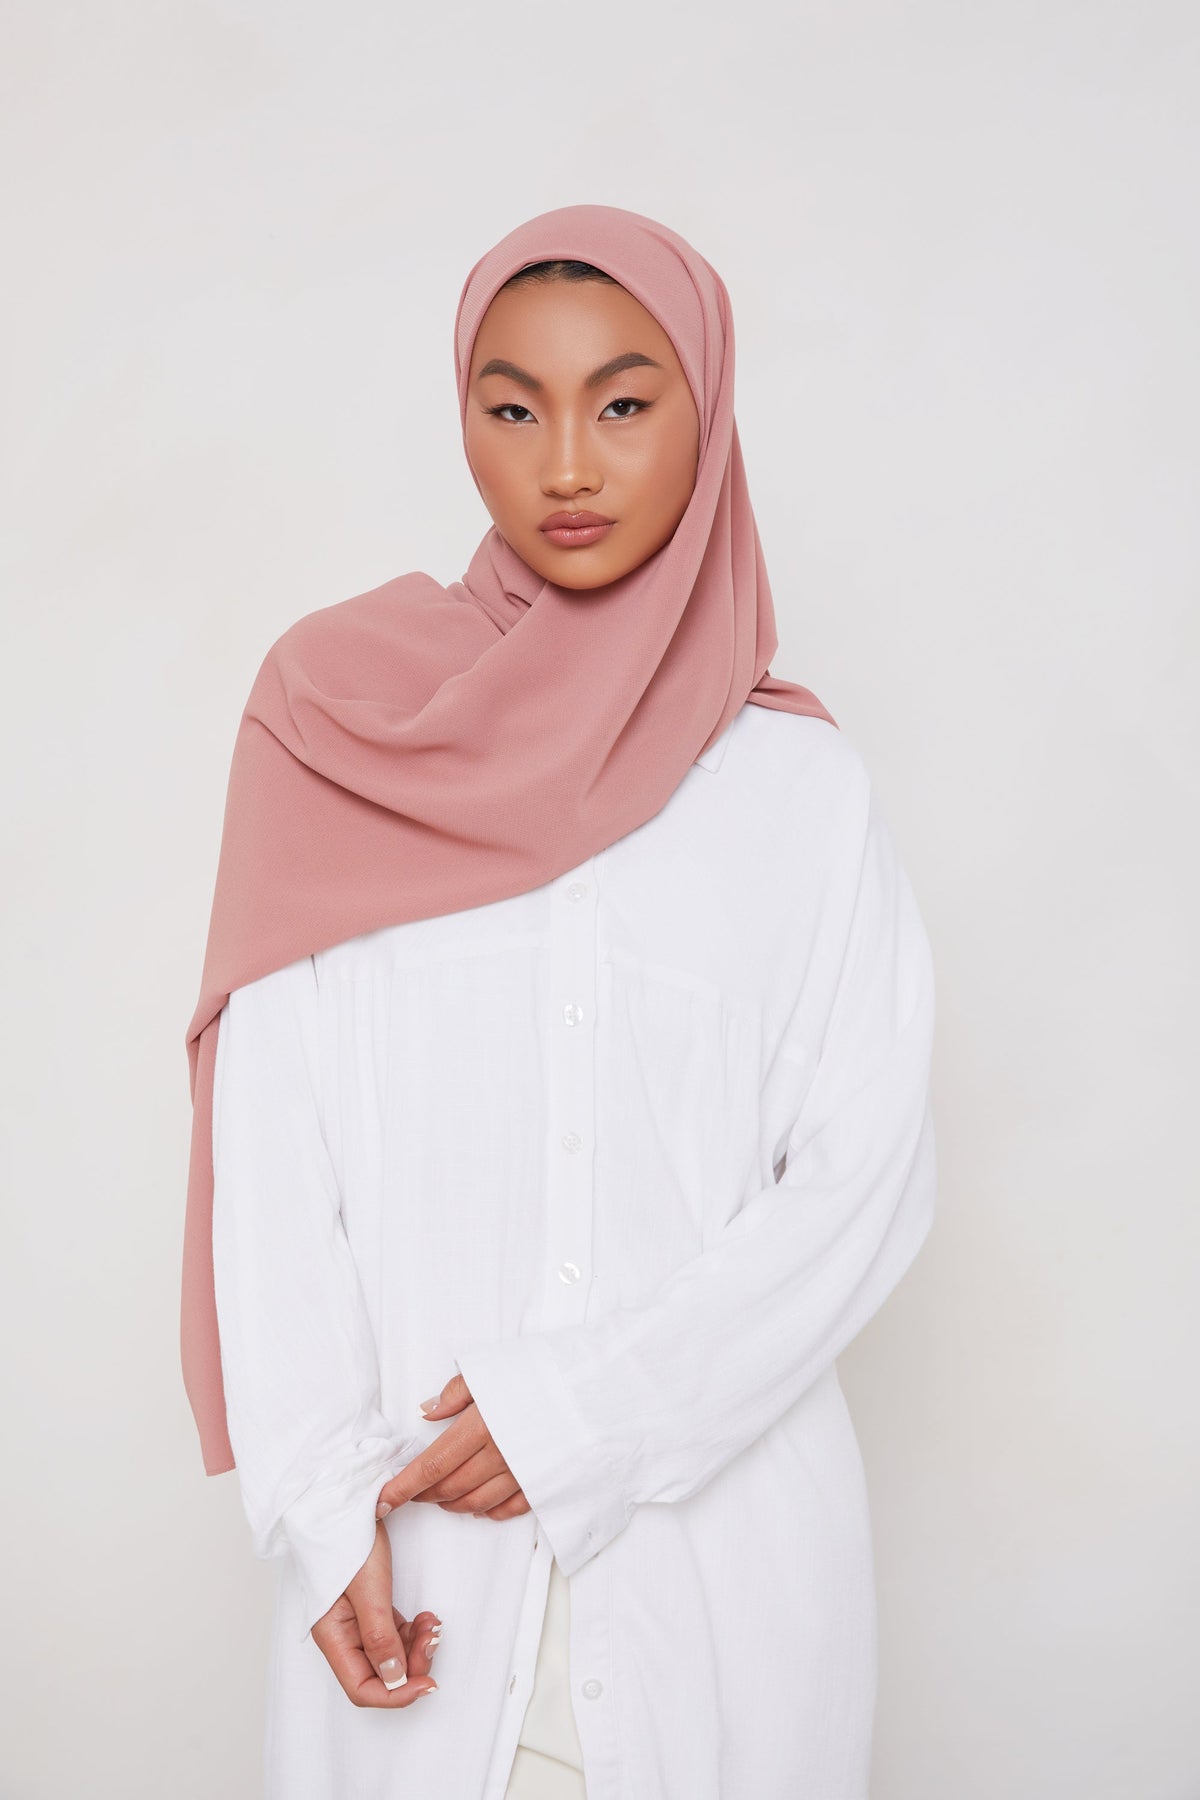 TEXTURE Twill Chiffon Hijab - Serendipity epschoolboard 